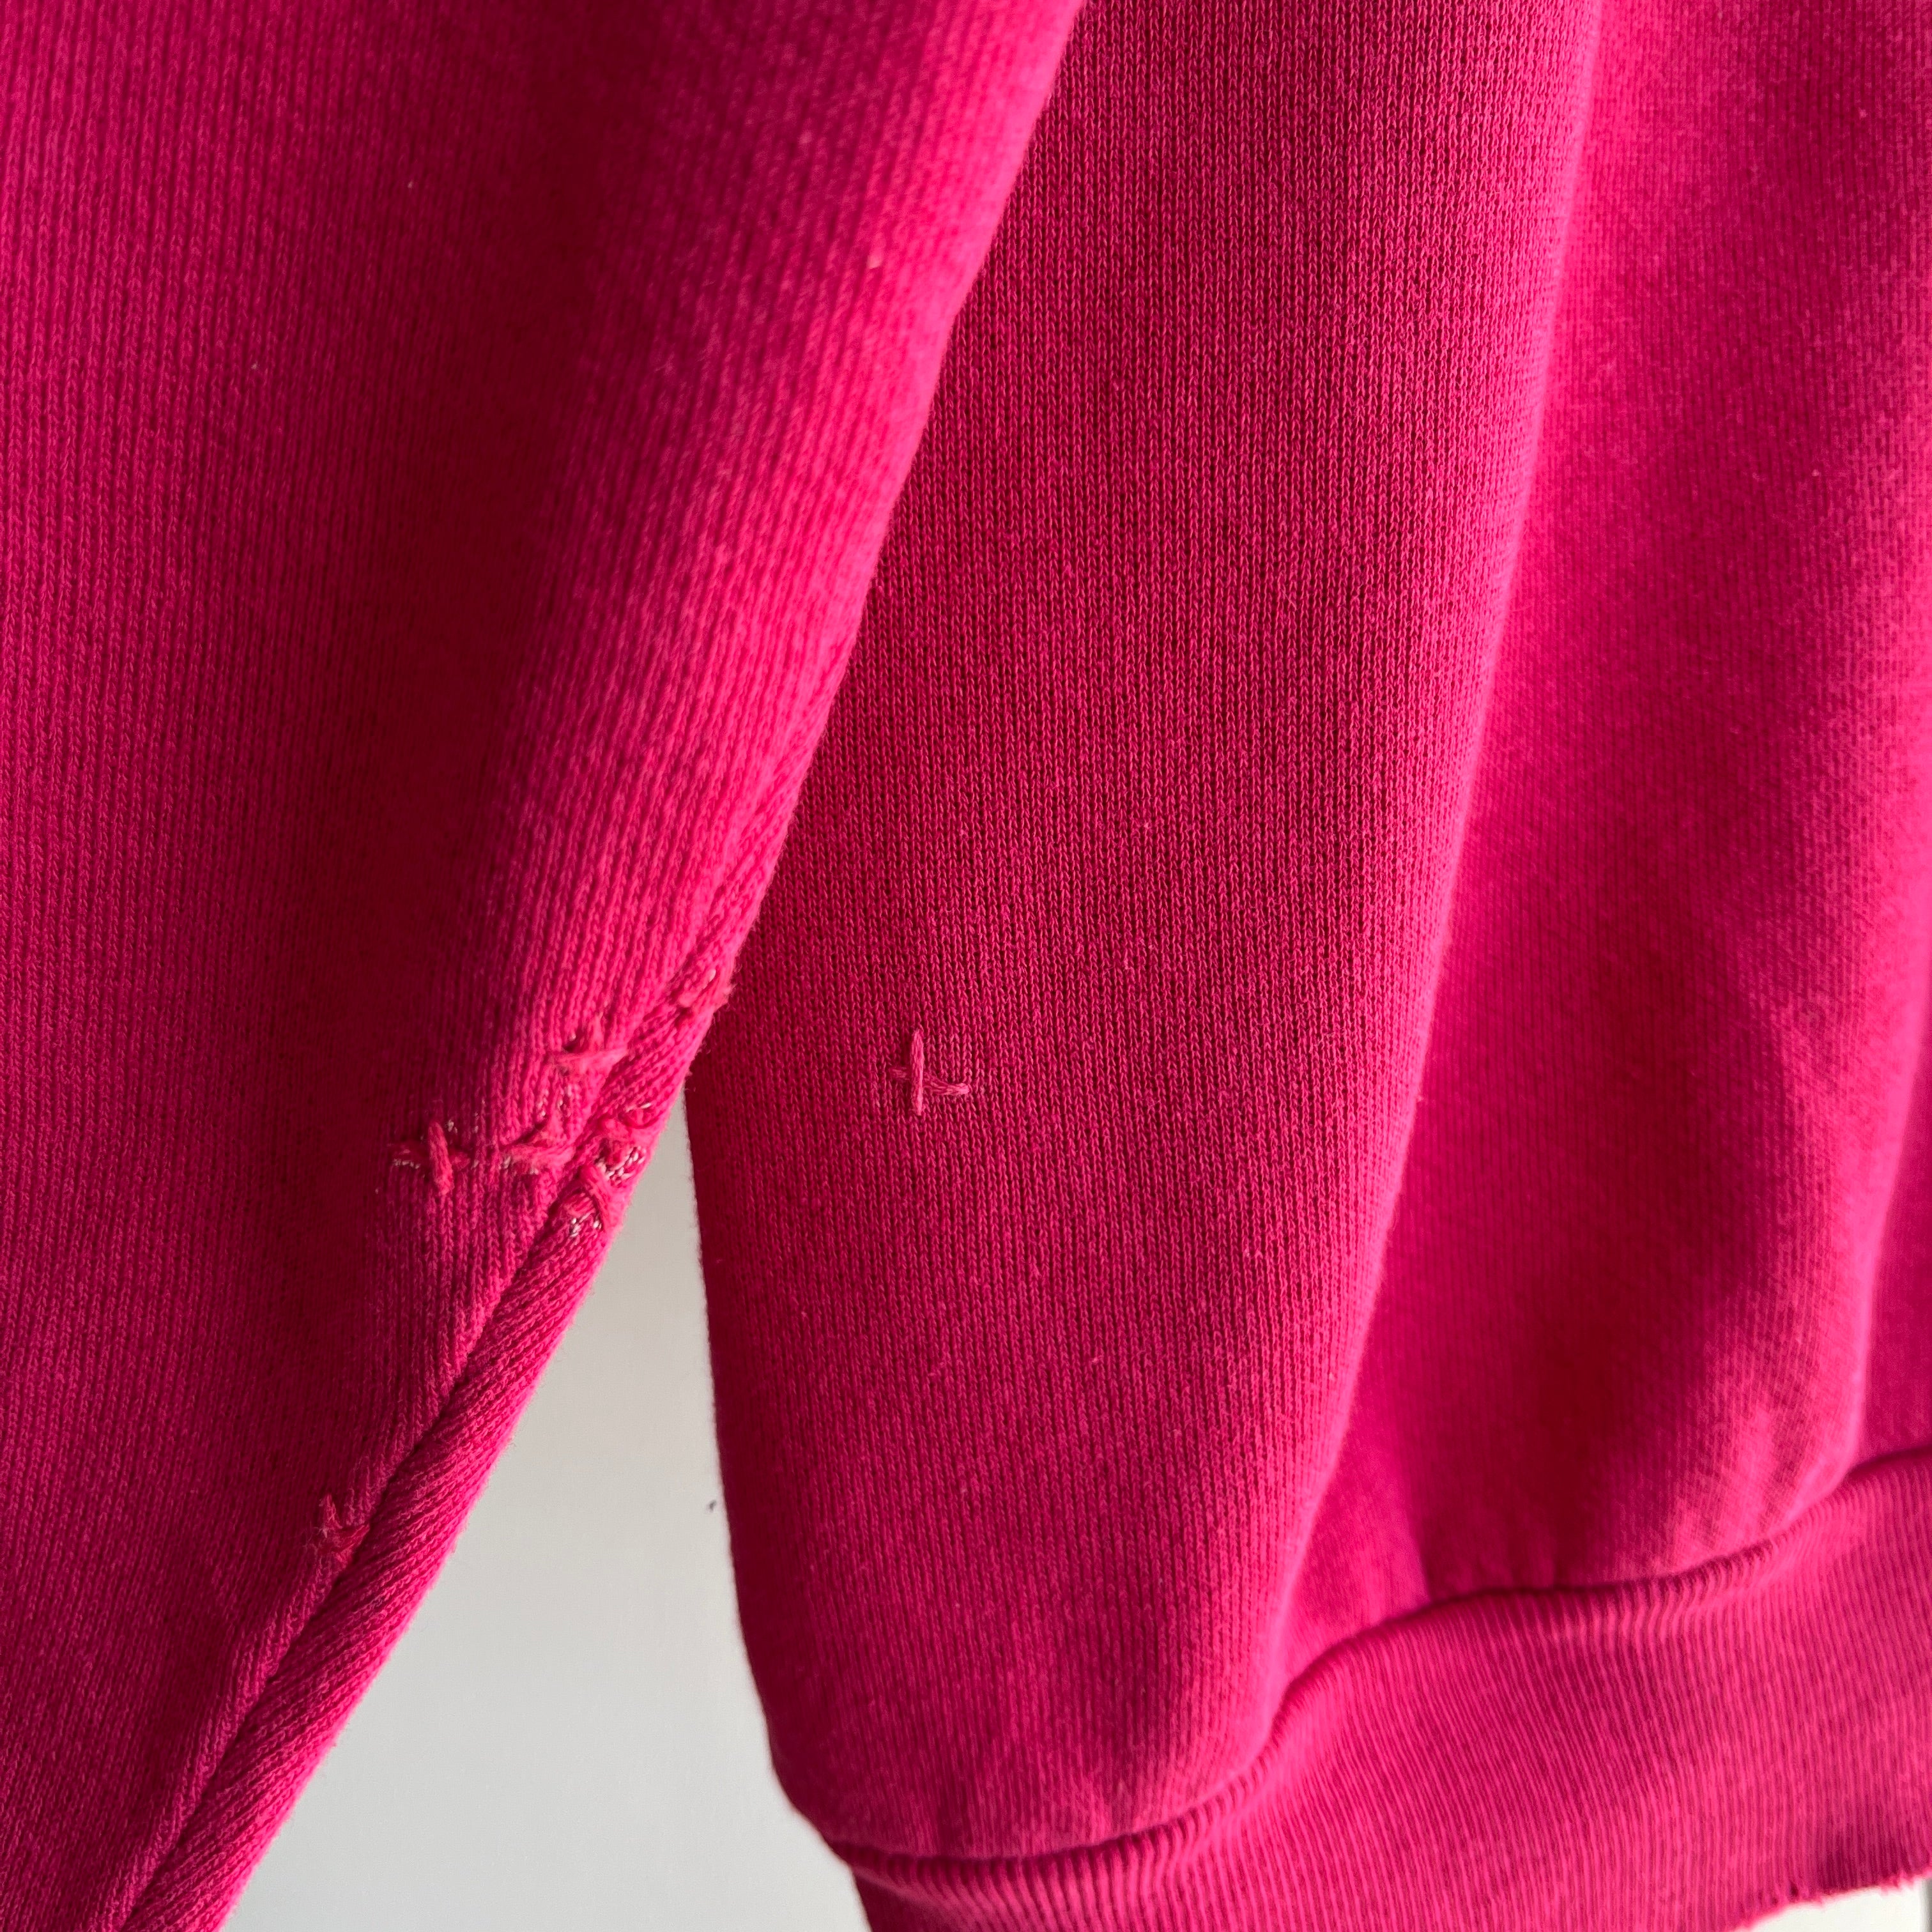 1980s DIY Hand Mended Tattered Hot Pink Sweatshirt